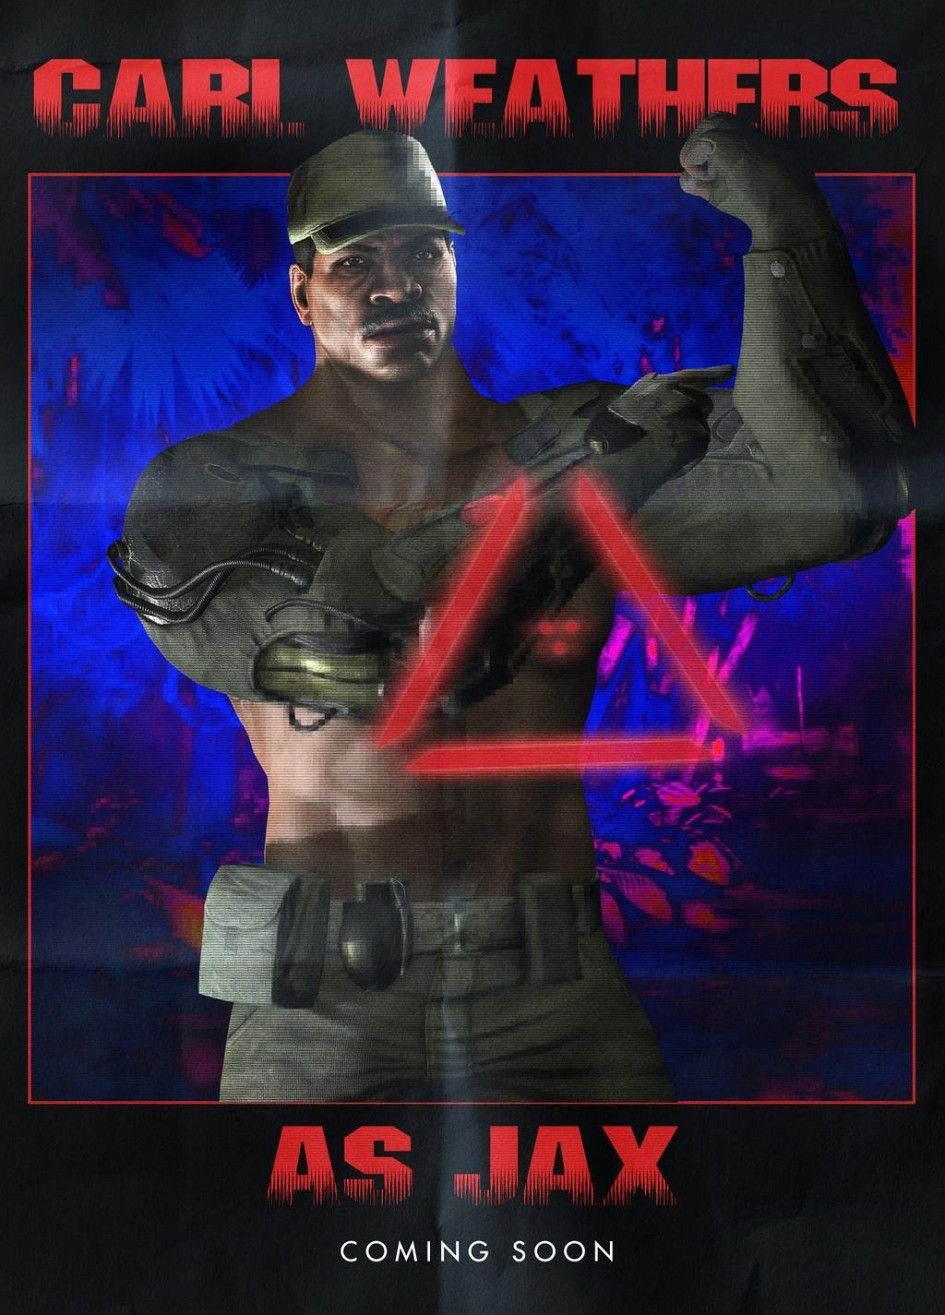 Predator Mortal Kombat X Poster 2